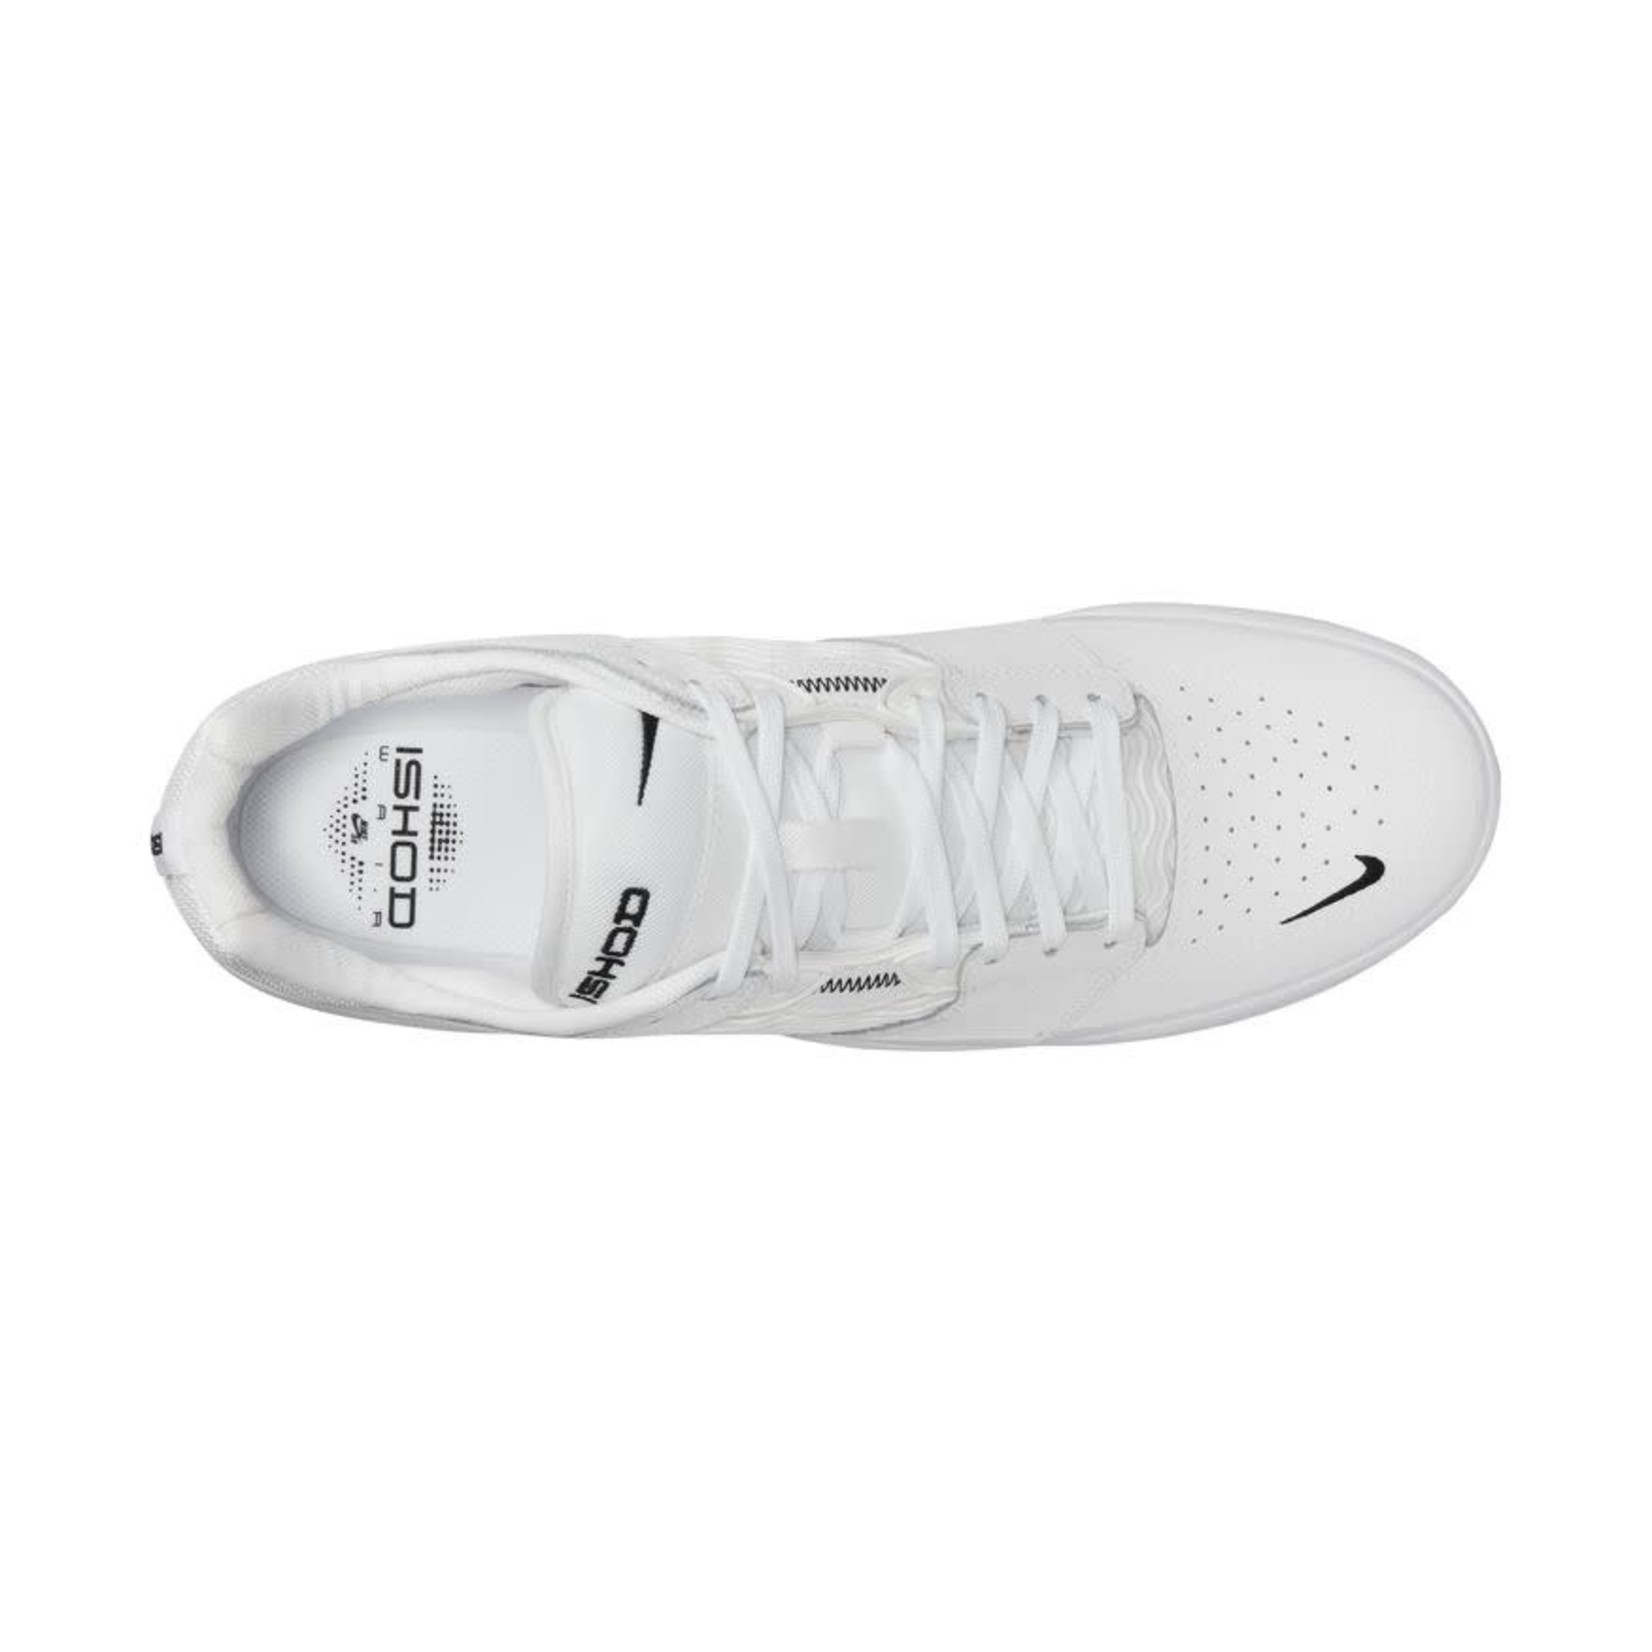 Nike SB Nike SB Ishod Wair Premium Black/White-Black